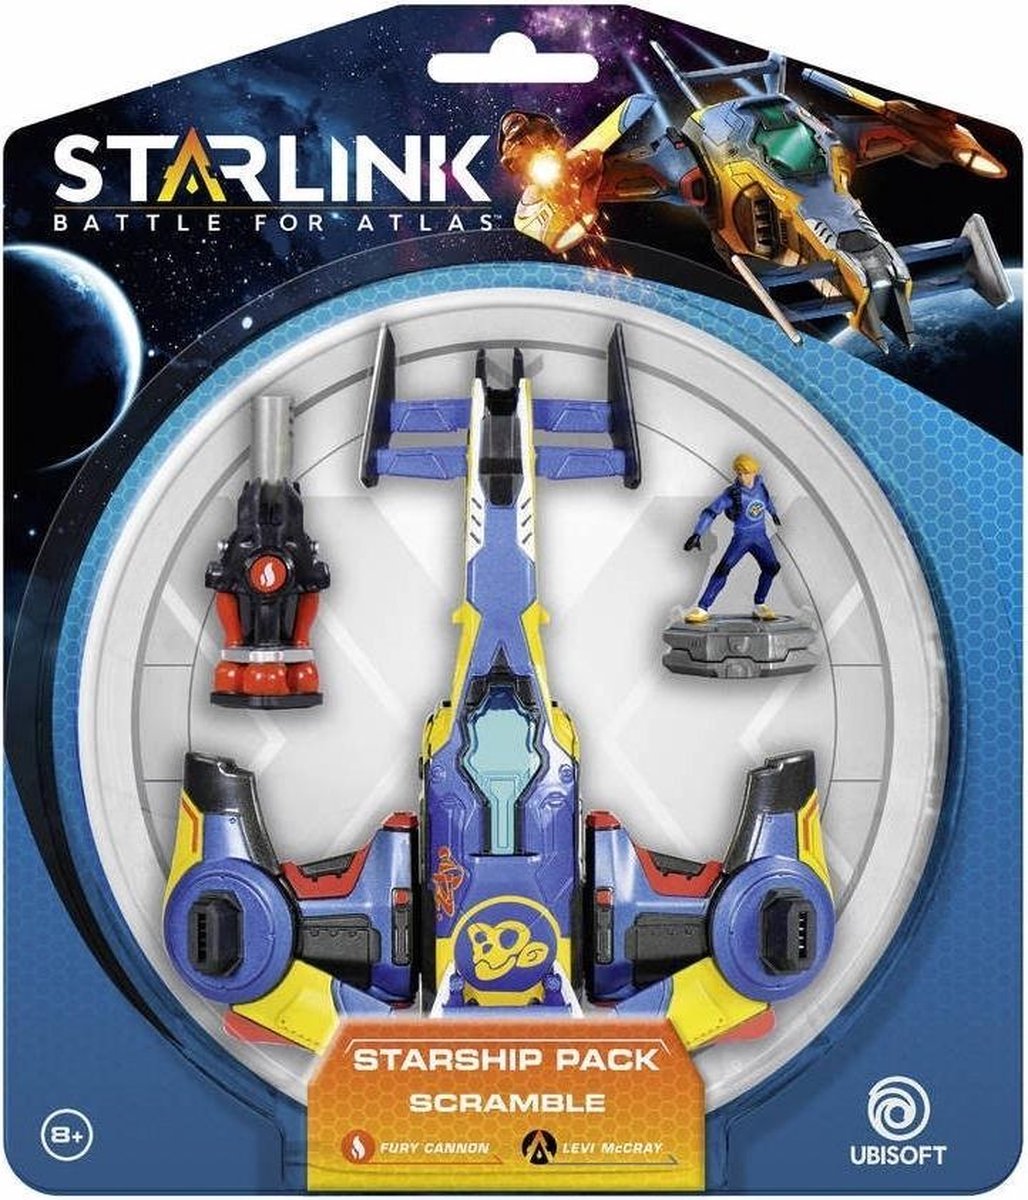 Starlink Starship Pack Scramble (exclusive) - Ubisoft